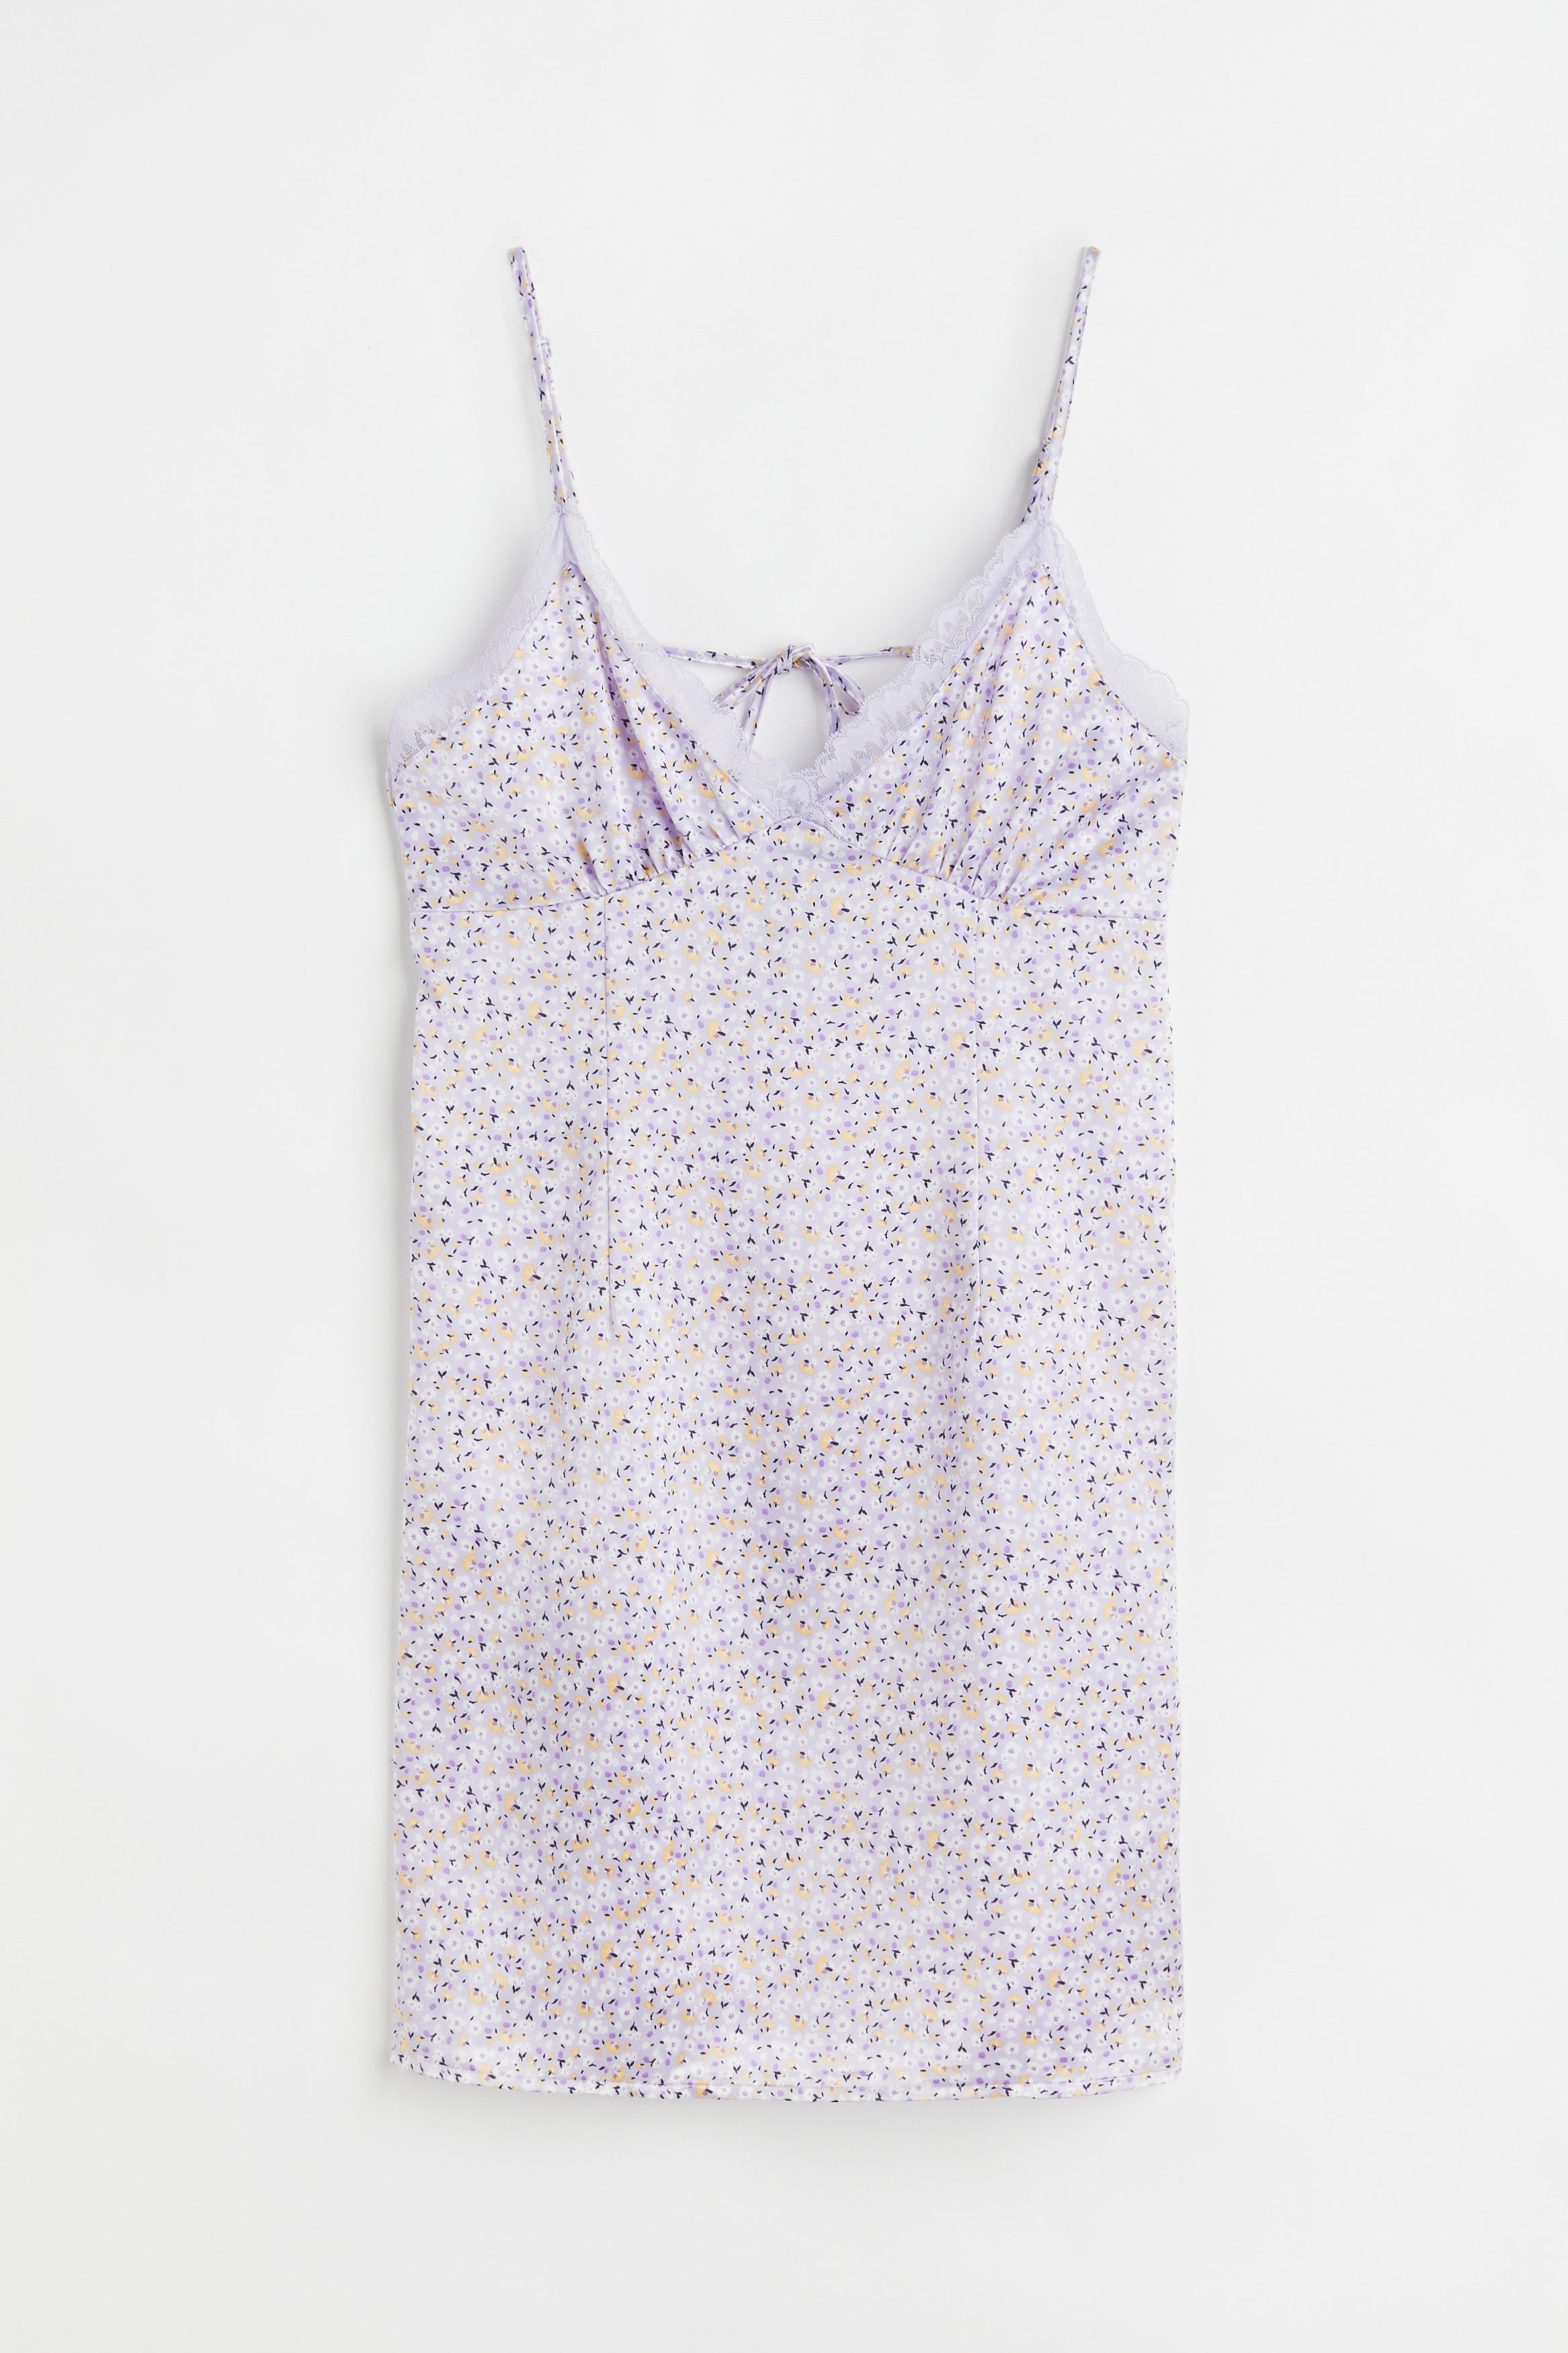 Billede af H&M Slip In-kjole I Satin Lyslilla/småblomstret, Festkjoler. Farve: Light purple/small flowers størrelse L